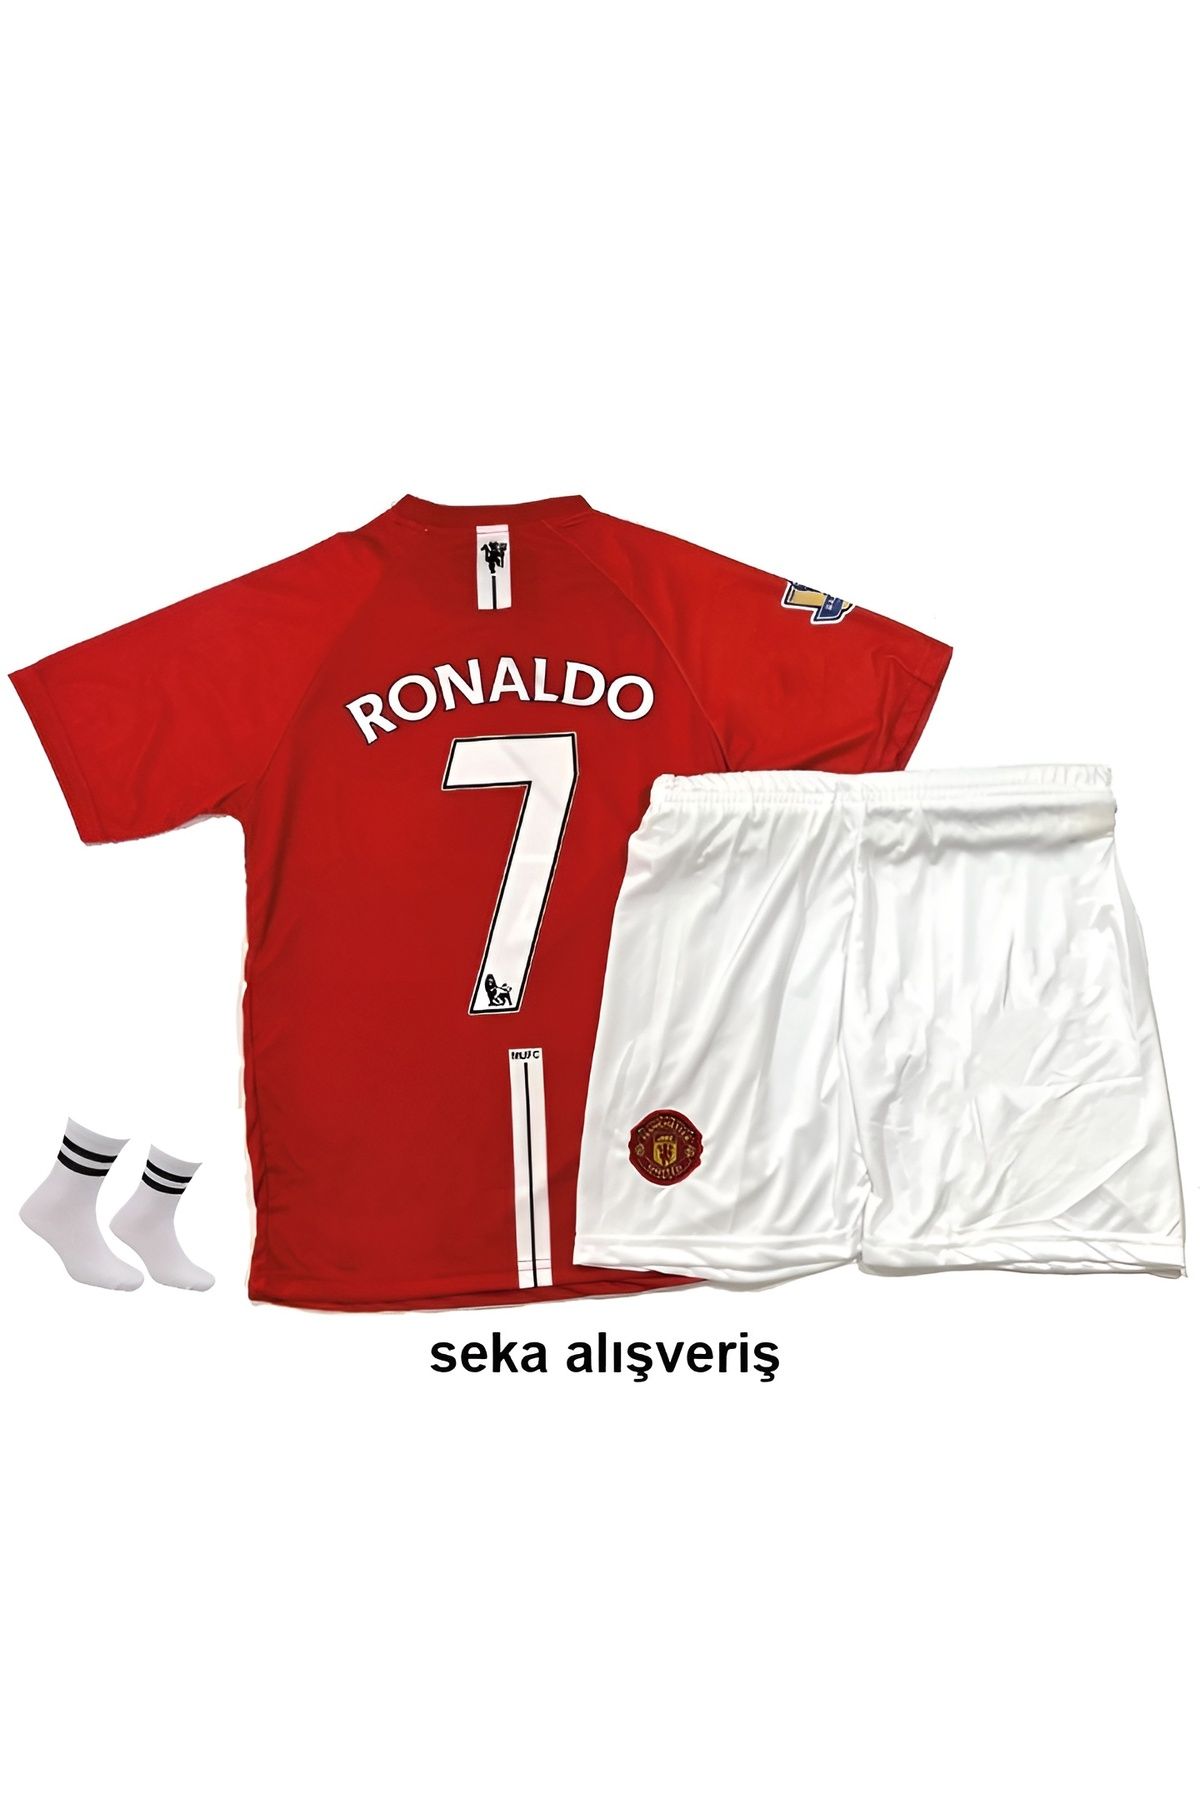 Seka Alışveriş Ronaldo Kırmızı Retro 2008 Manchester United Ronaldo 7 Moscow Finali Çoçuk Forma Seti